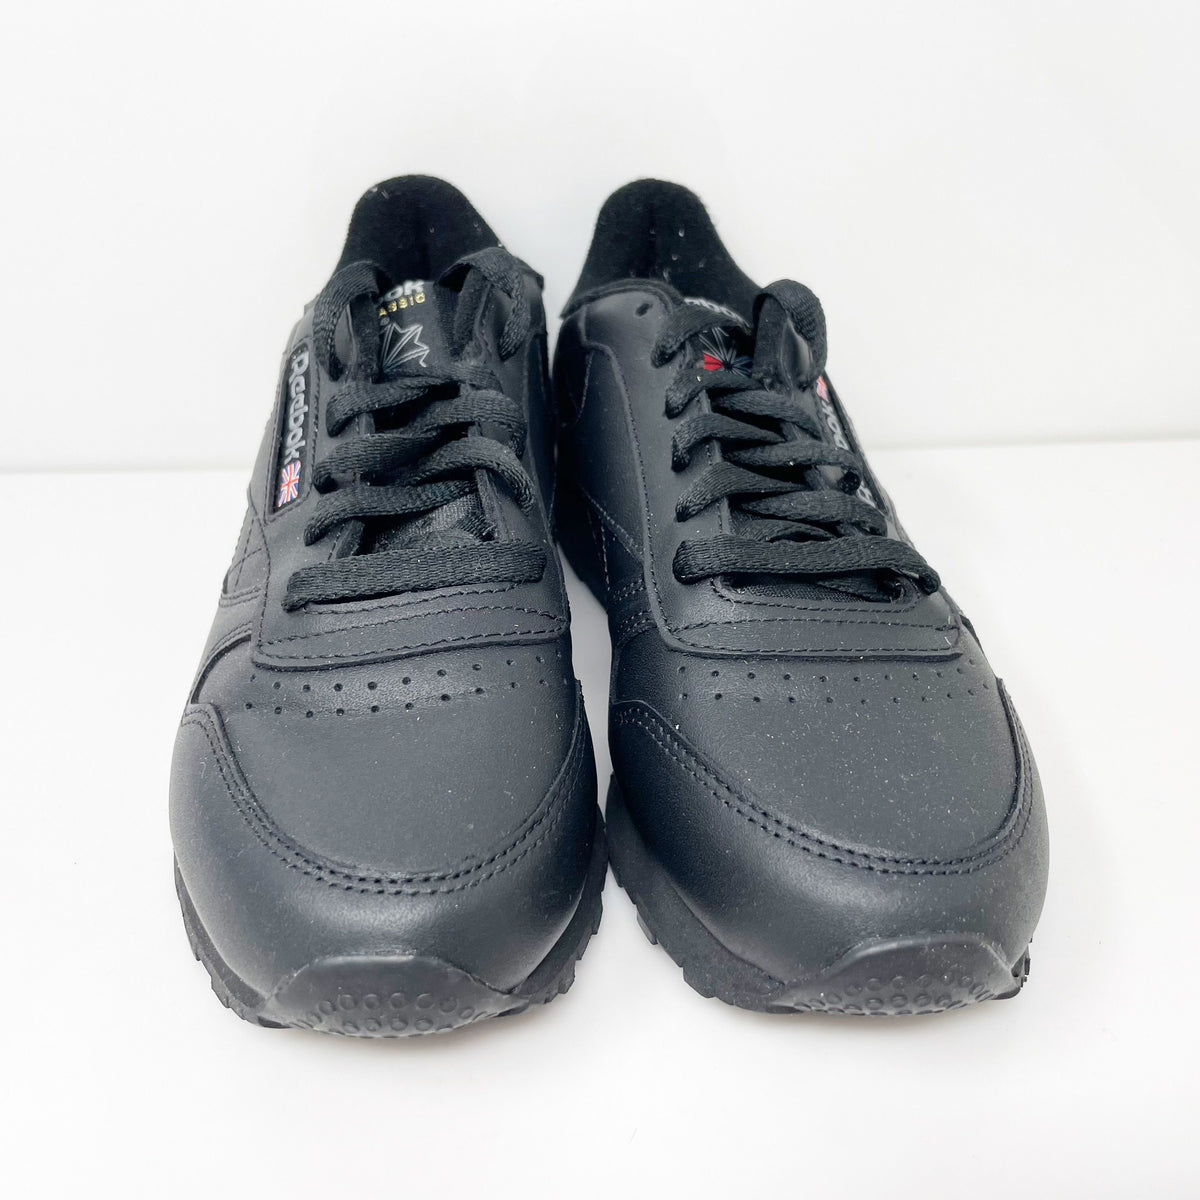 Reebok Women's Classic Leather Black Sneakers 5324 